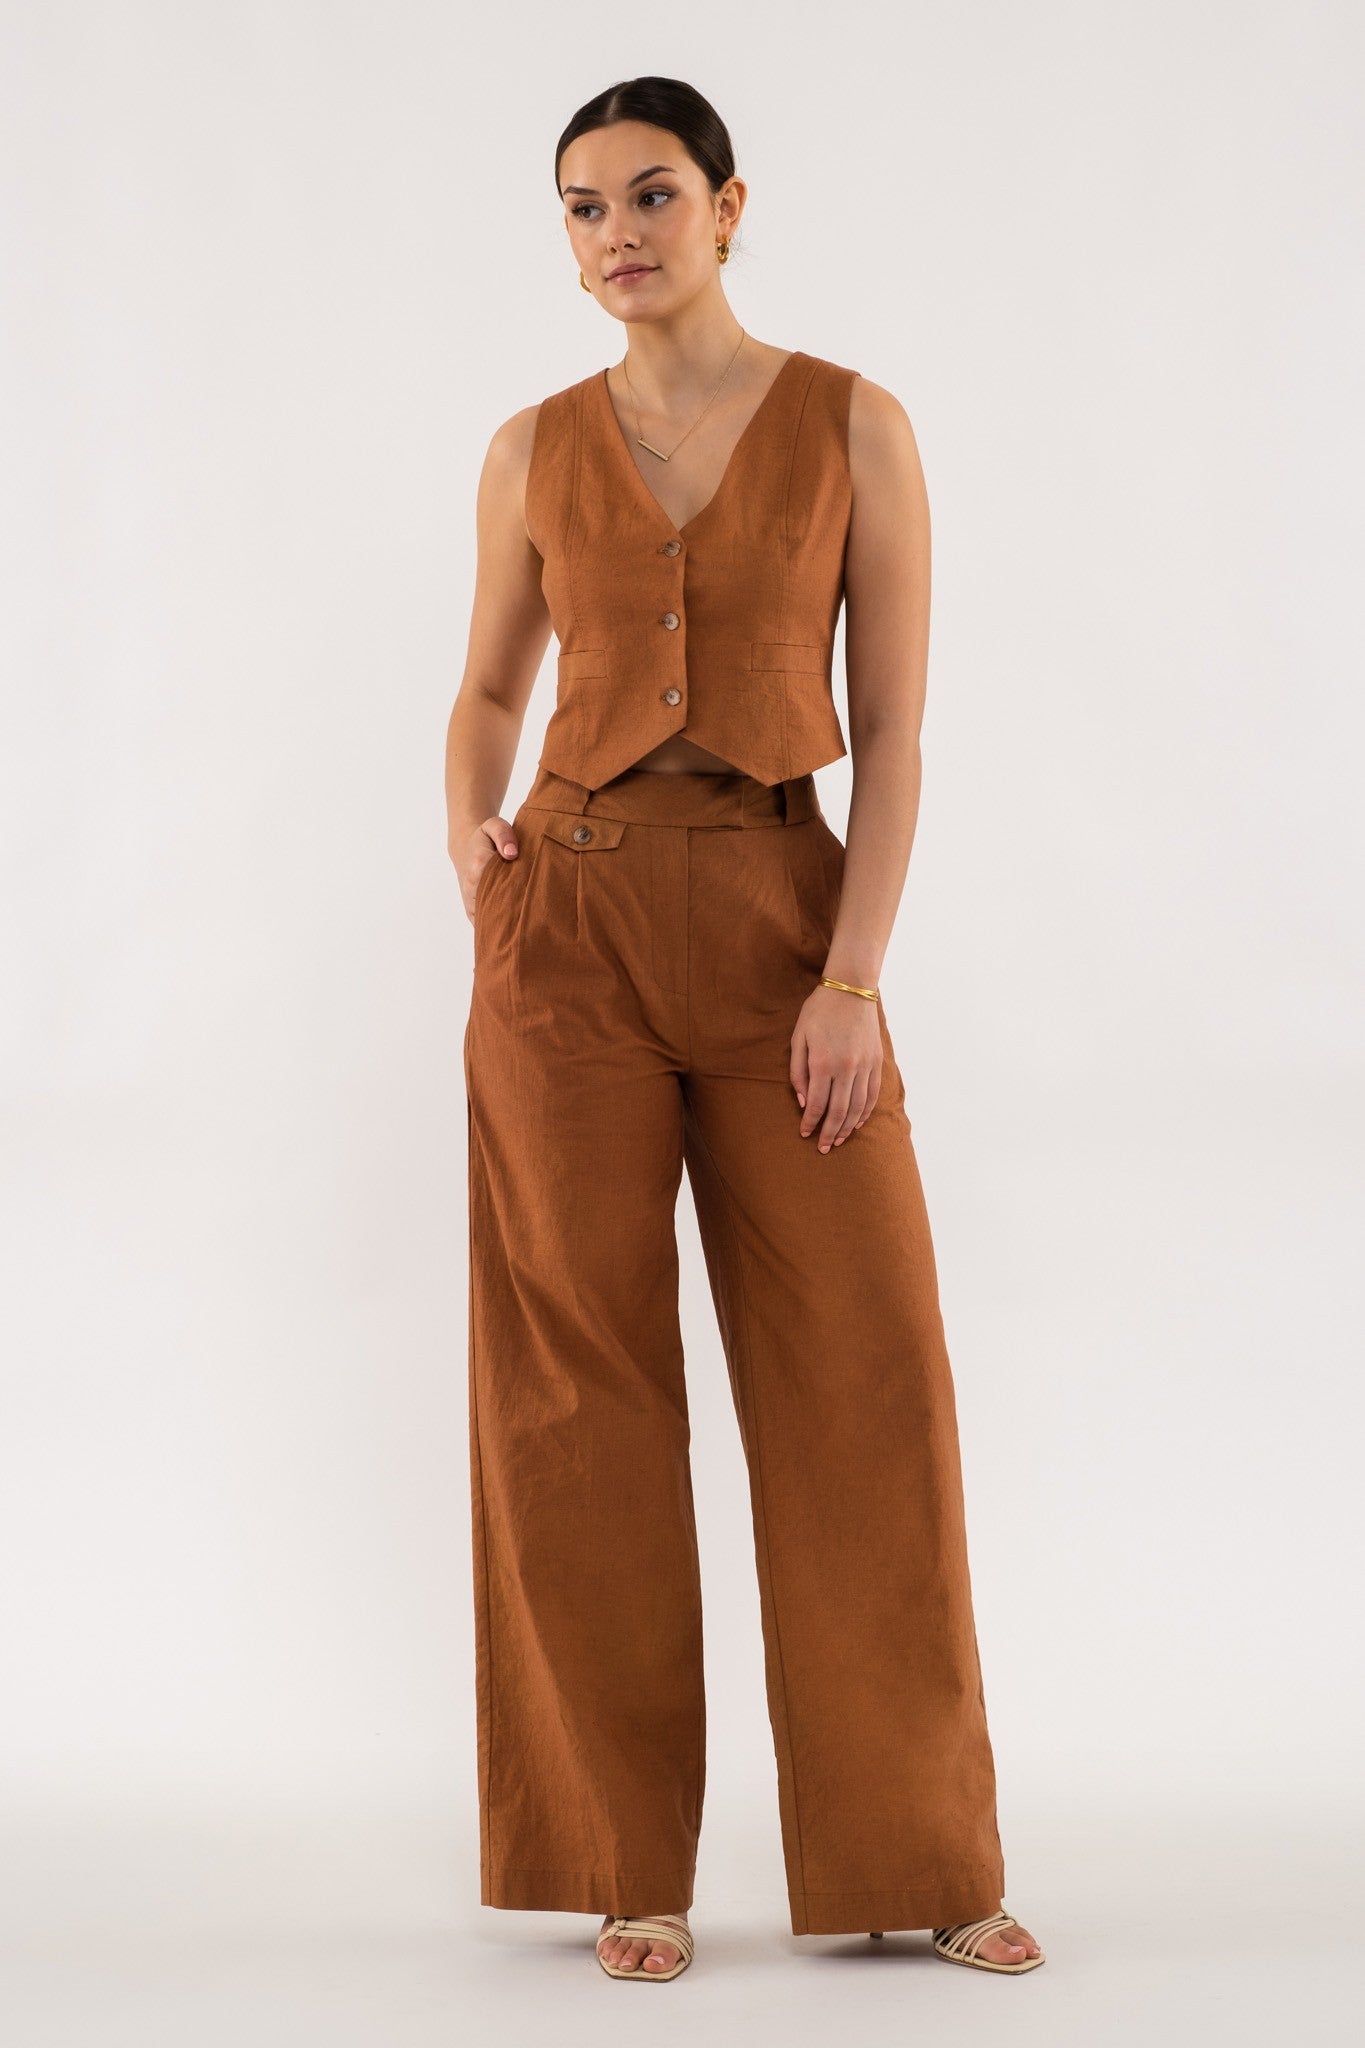 The Mariah Linen Vest + Pant Set - Sold Separately